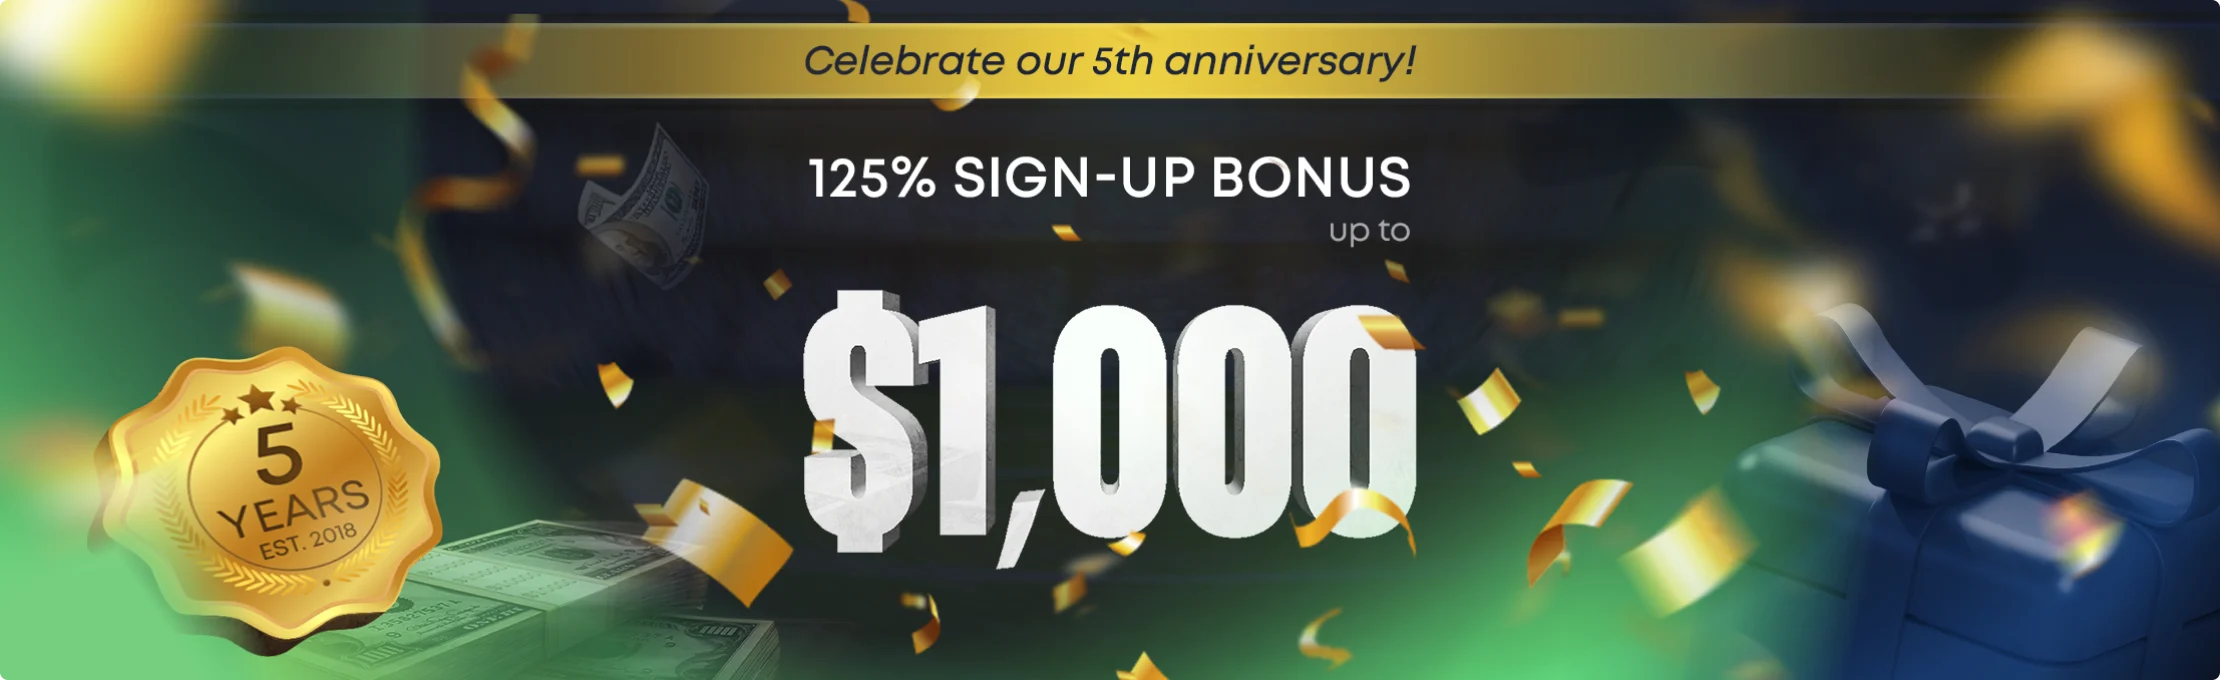 5th anniversary 125% sign-up bonus banner